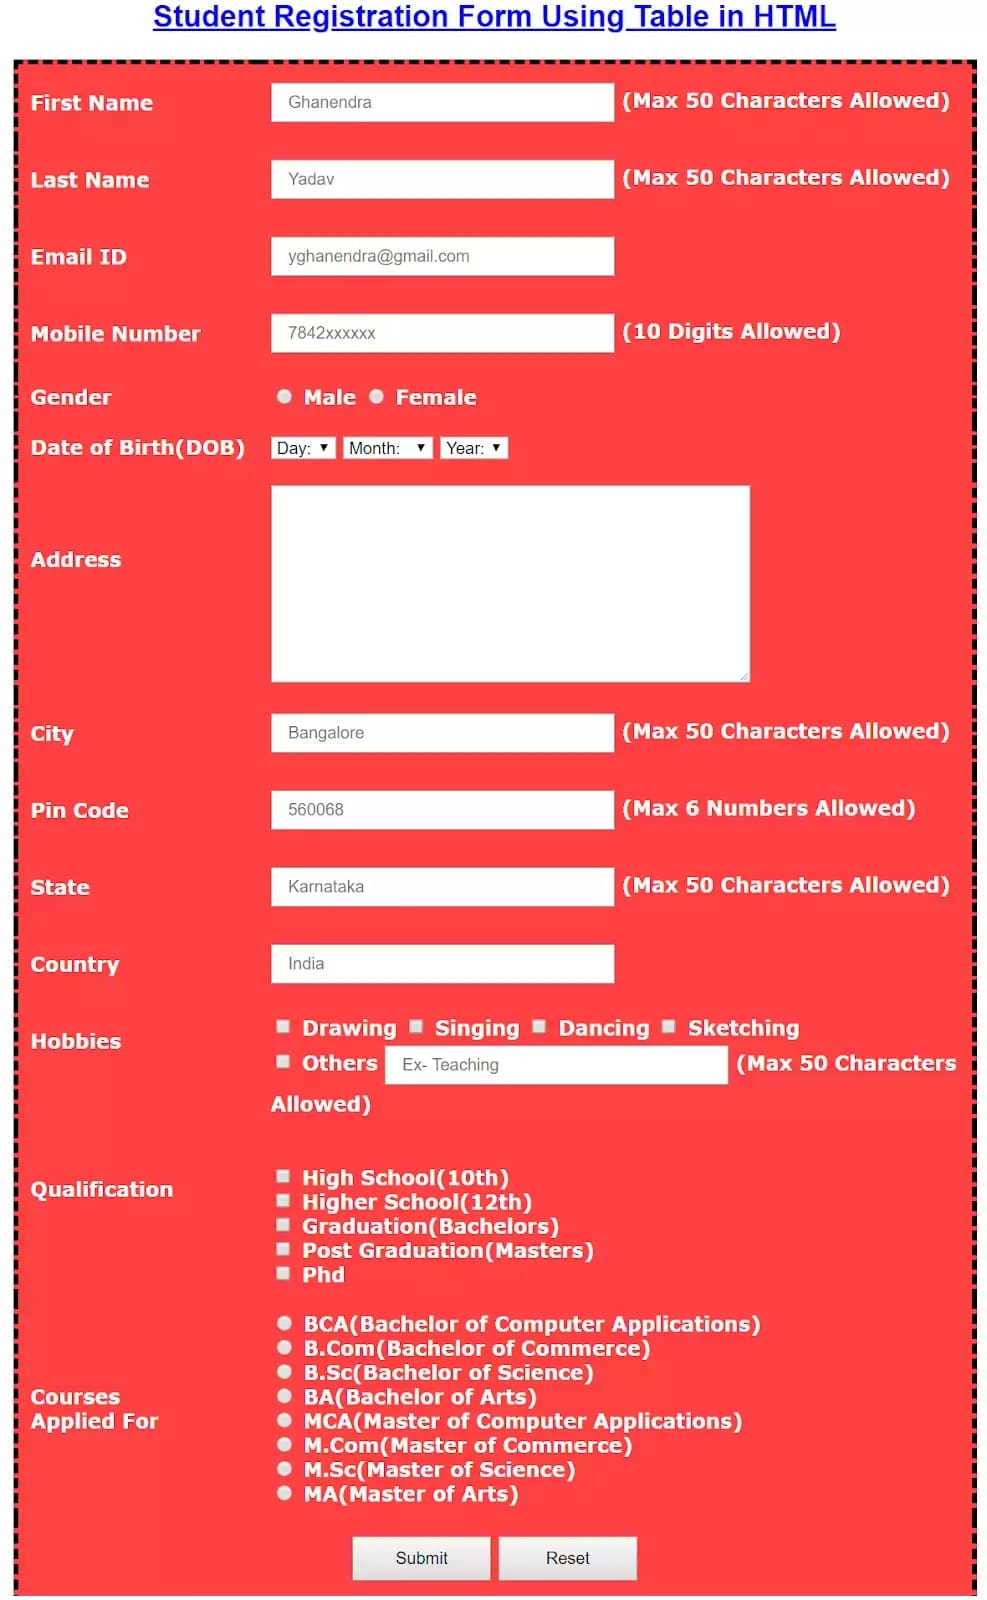 Student Registration Form in HTML